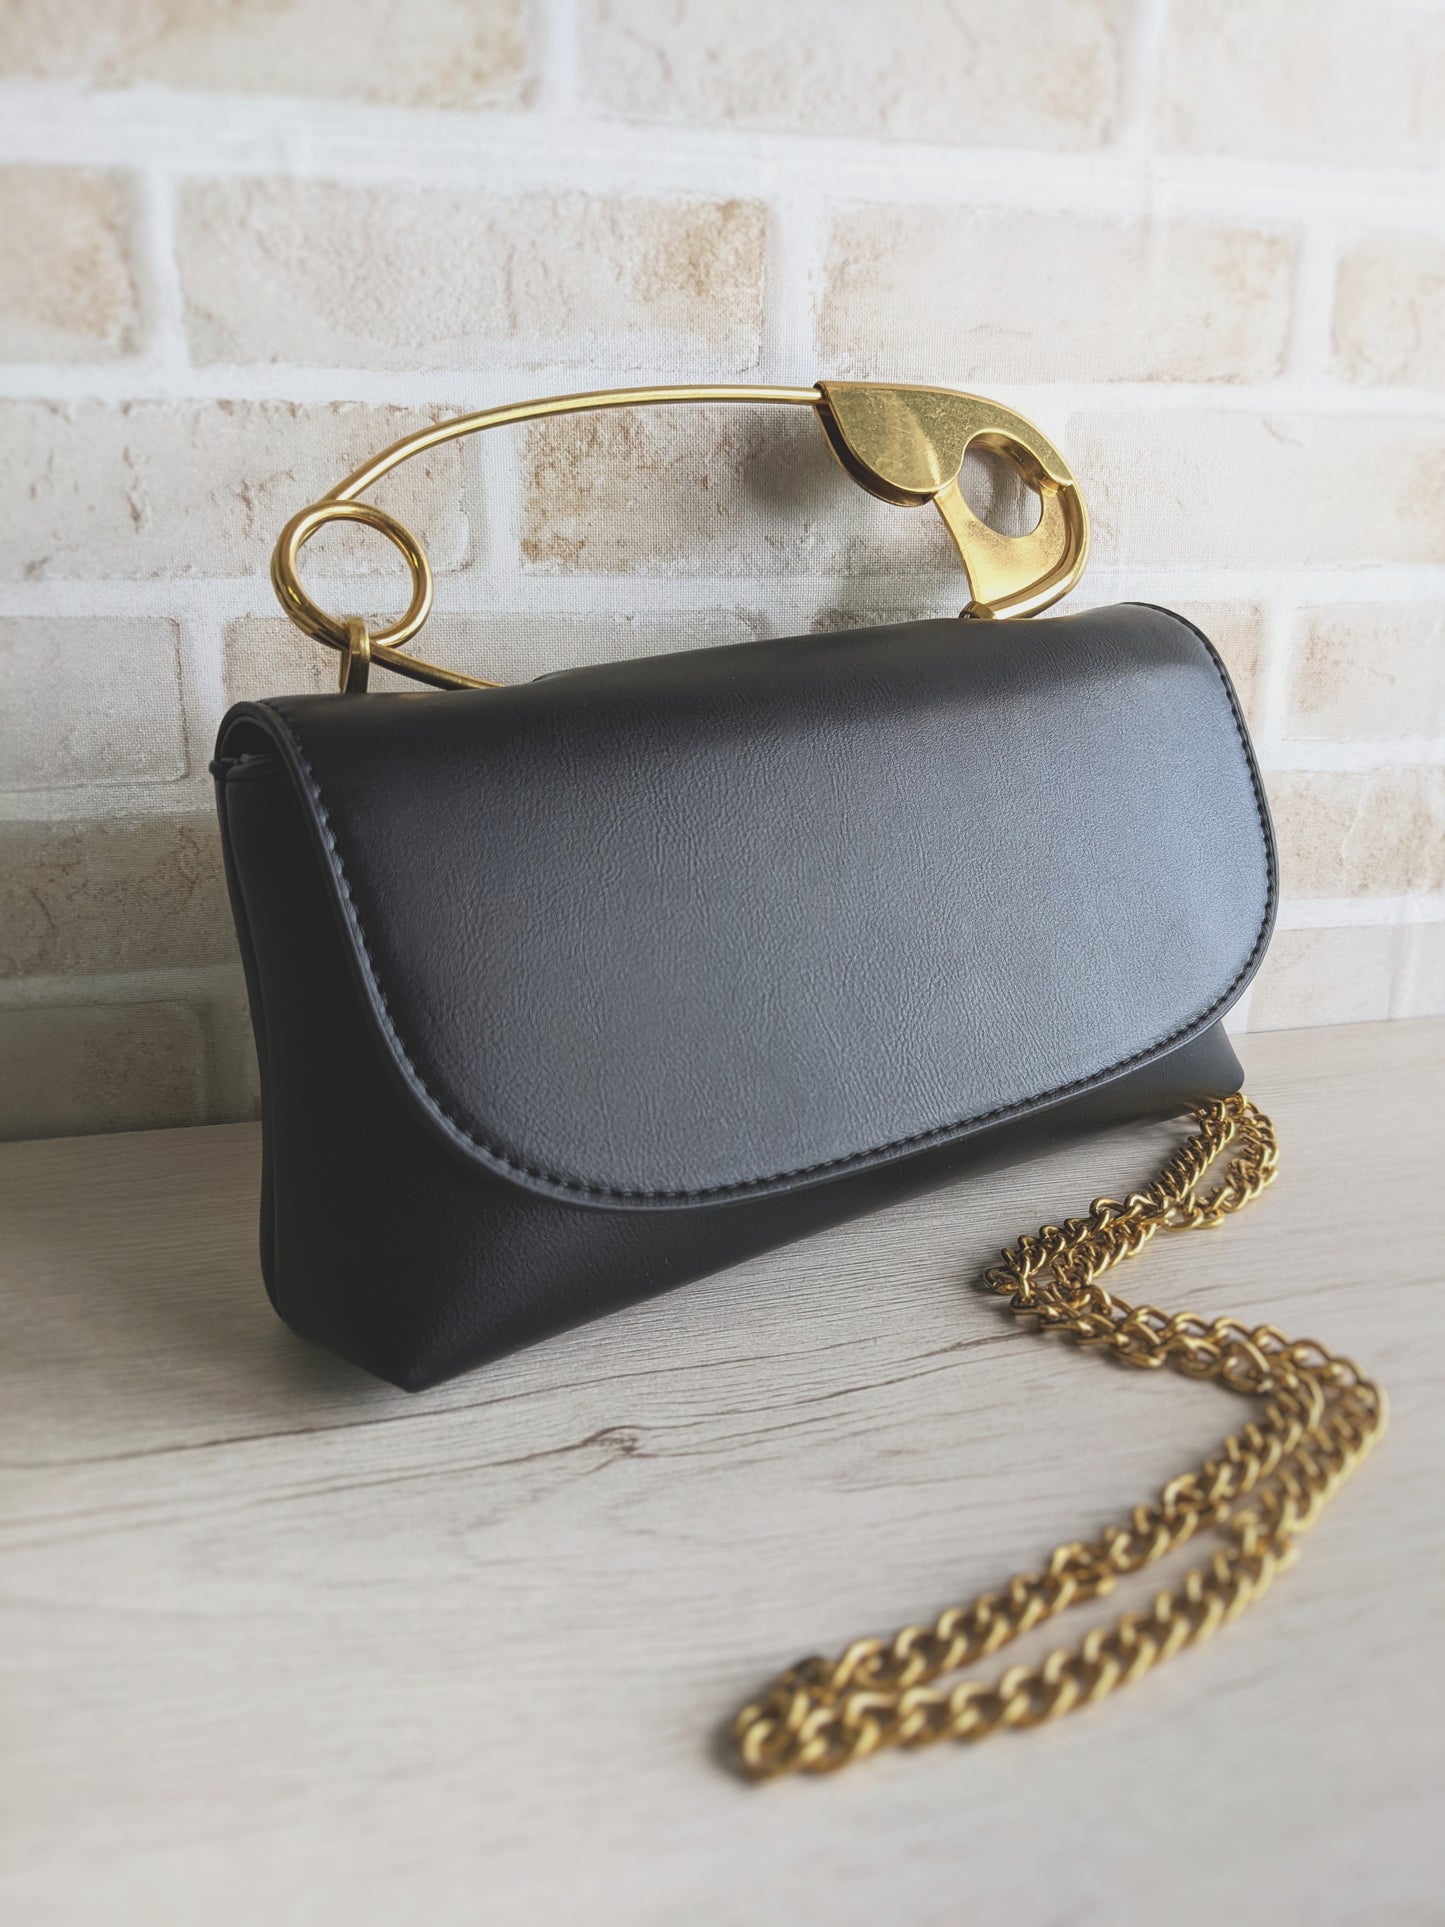 Big Pin Design Clutch, Soft And High-Texture Handbag, Fashion Chain  Shoulder Bag-Beige: Handbags: Amazon.com